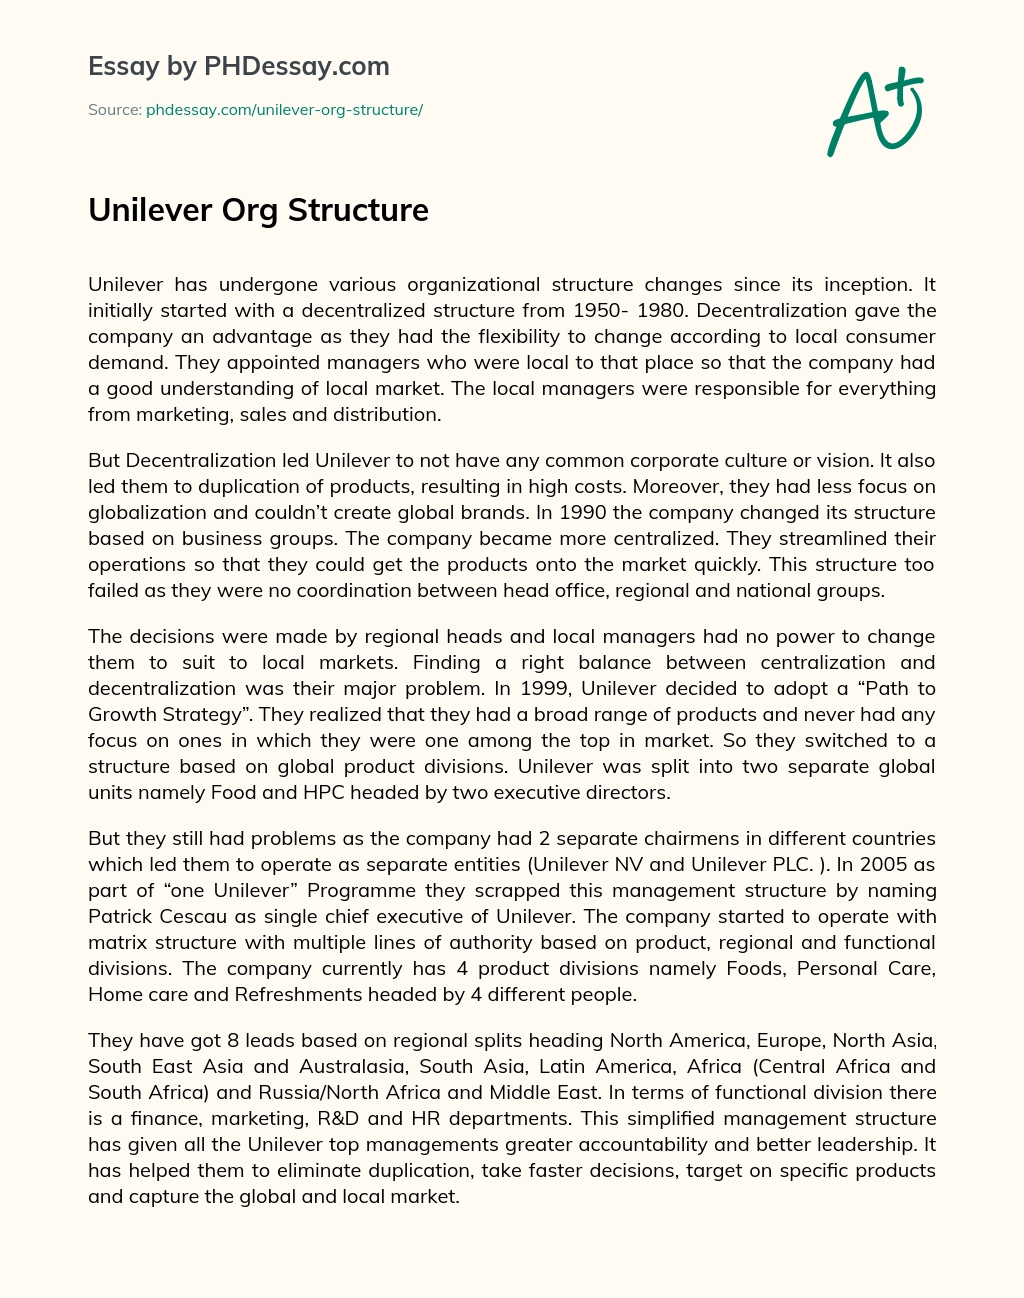 Unilever Org Structure essay